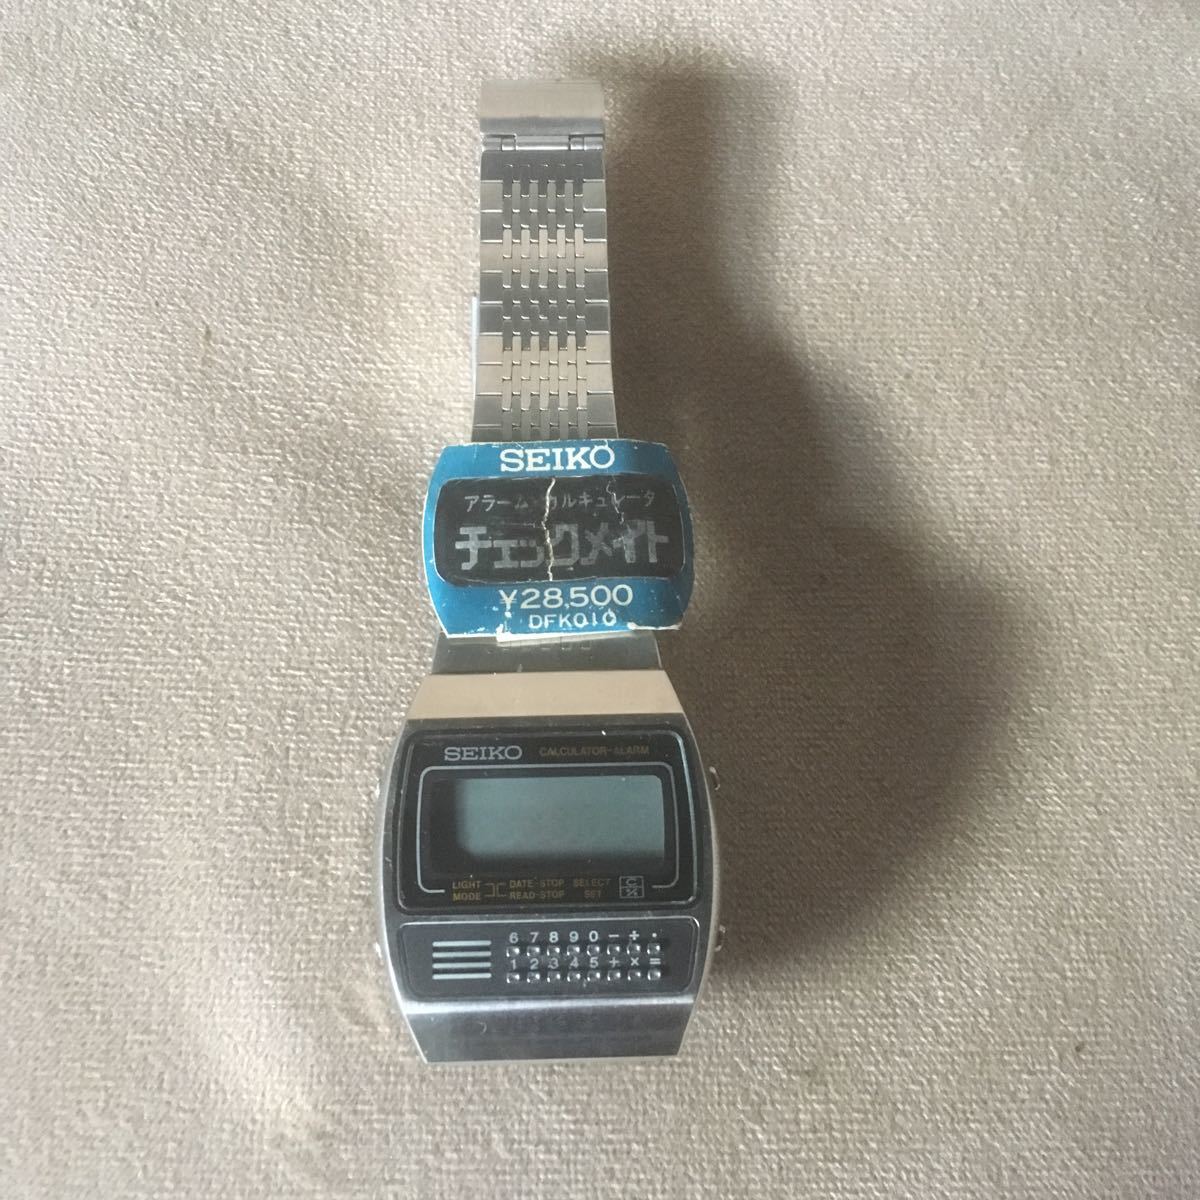 K8 SEIKO Seiko checkmate alarm wristwatch 0359-5000 black dead stock present condition junk 